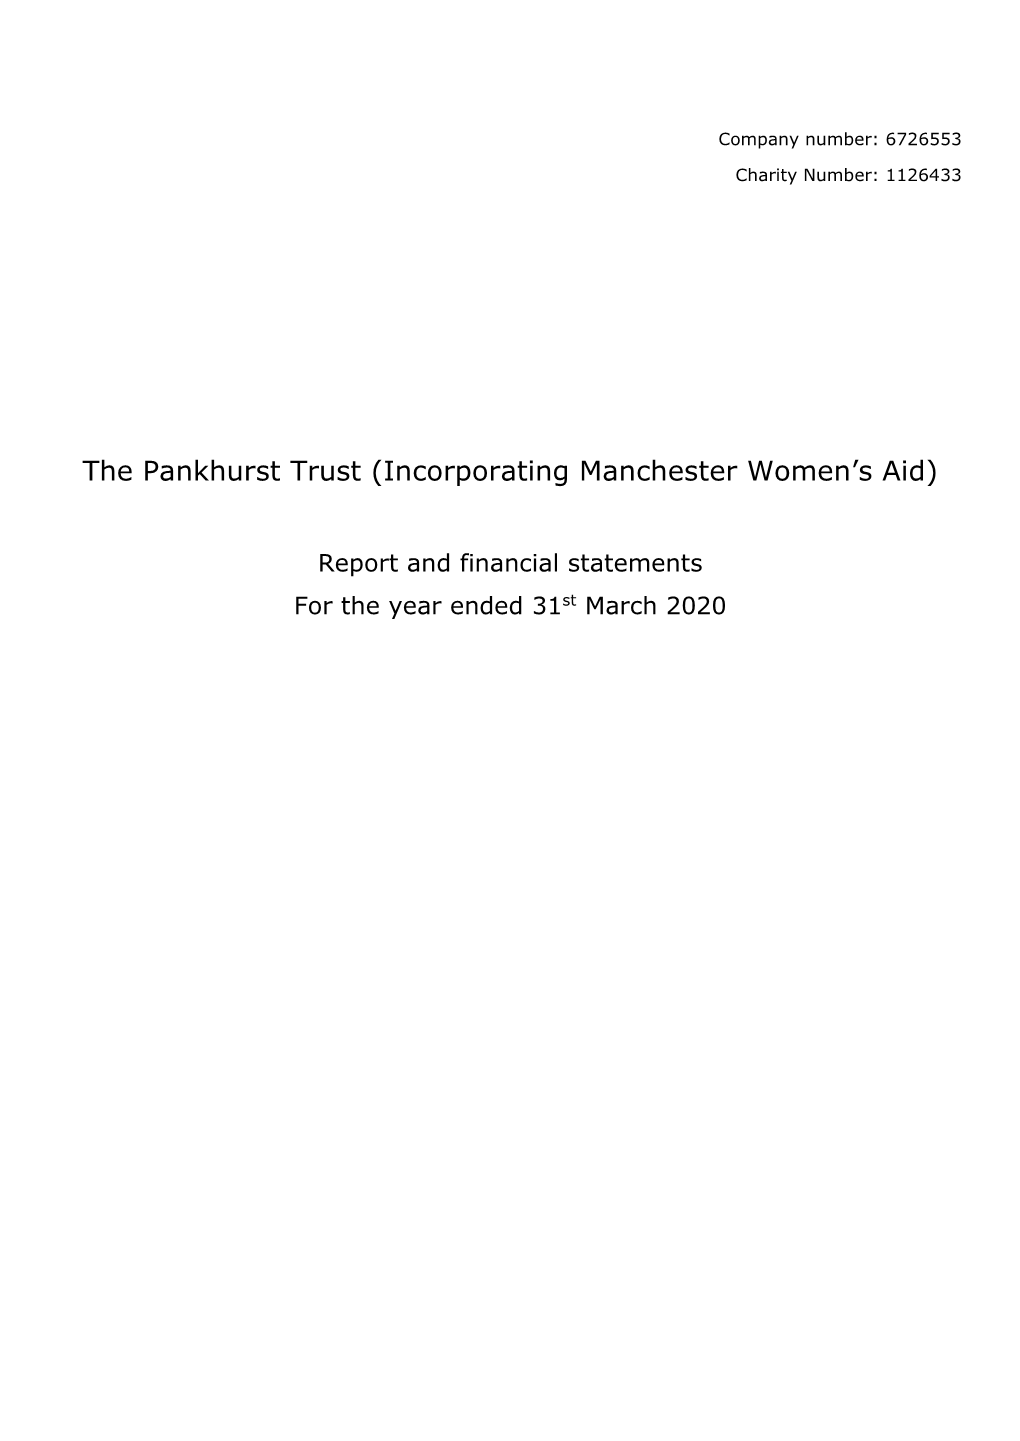 The Pankhurst Trust (Incorporating Manchester Women's Aid)